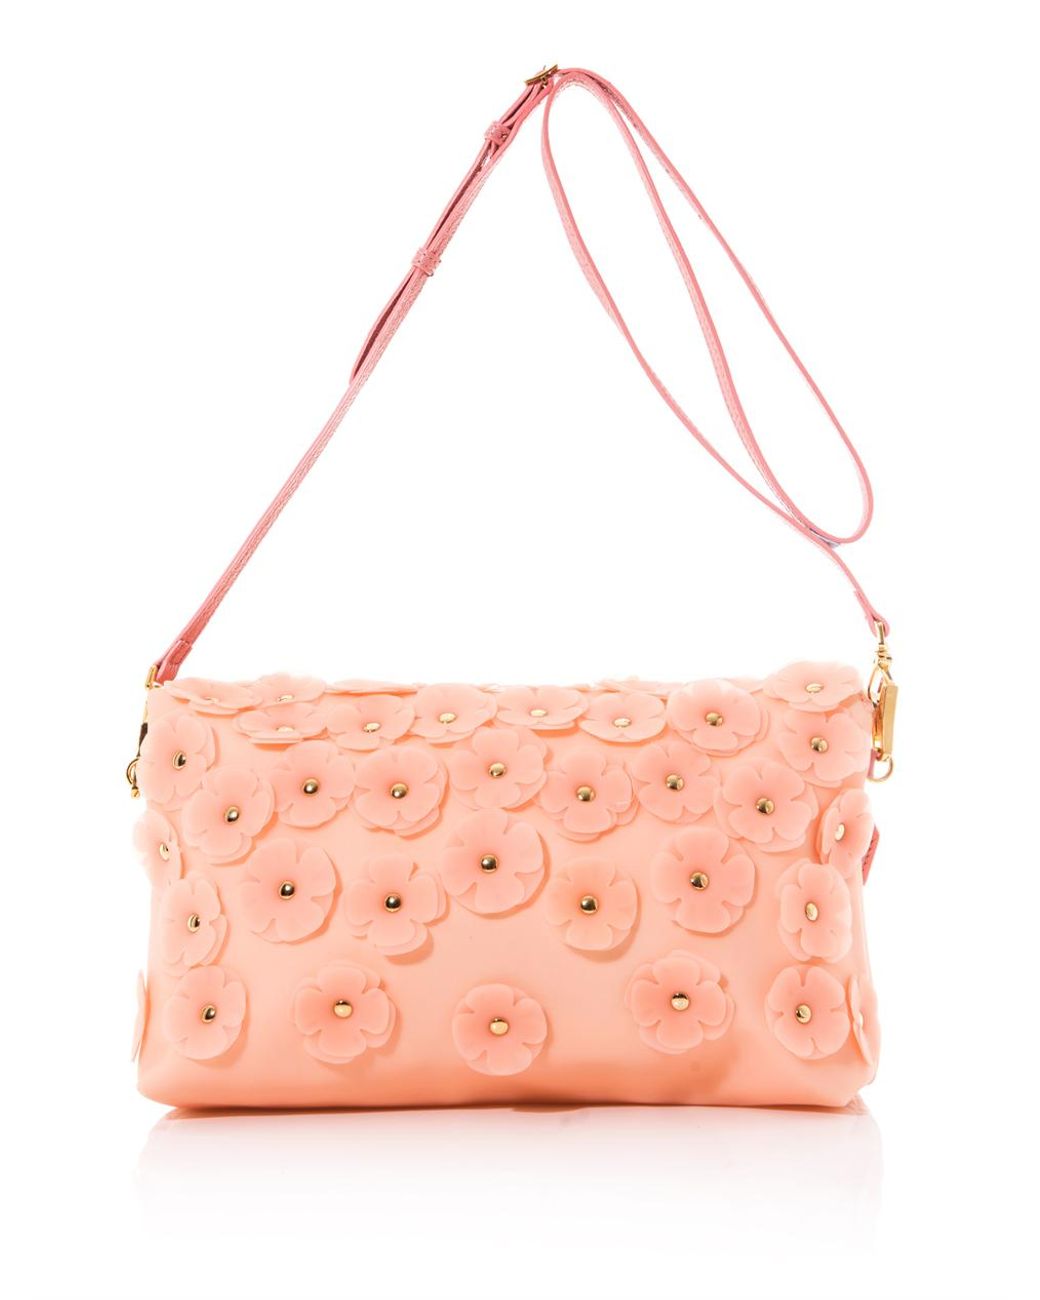 Burberry Prorsum Soft Rubber Appliqué Flower Clutch Bag in Pink | Lyst